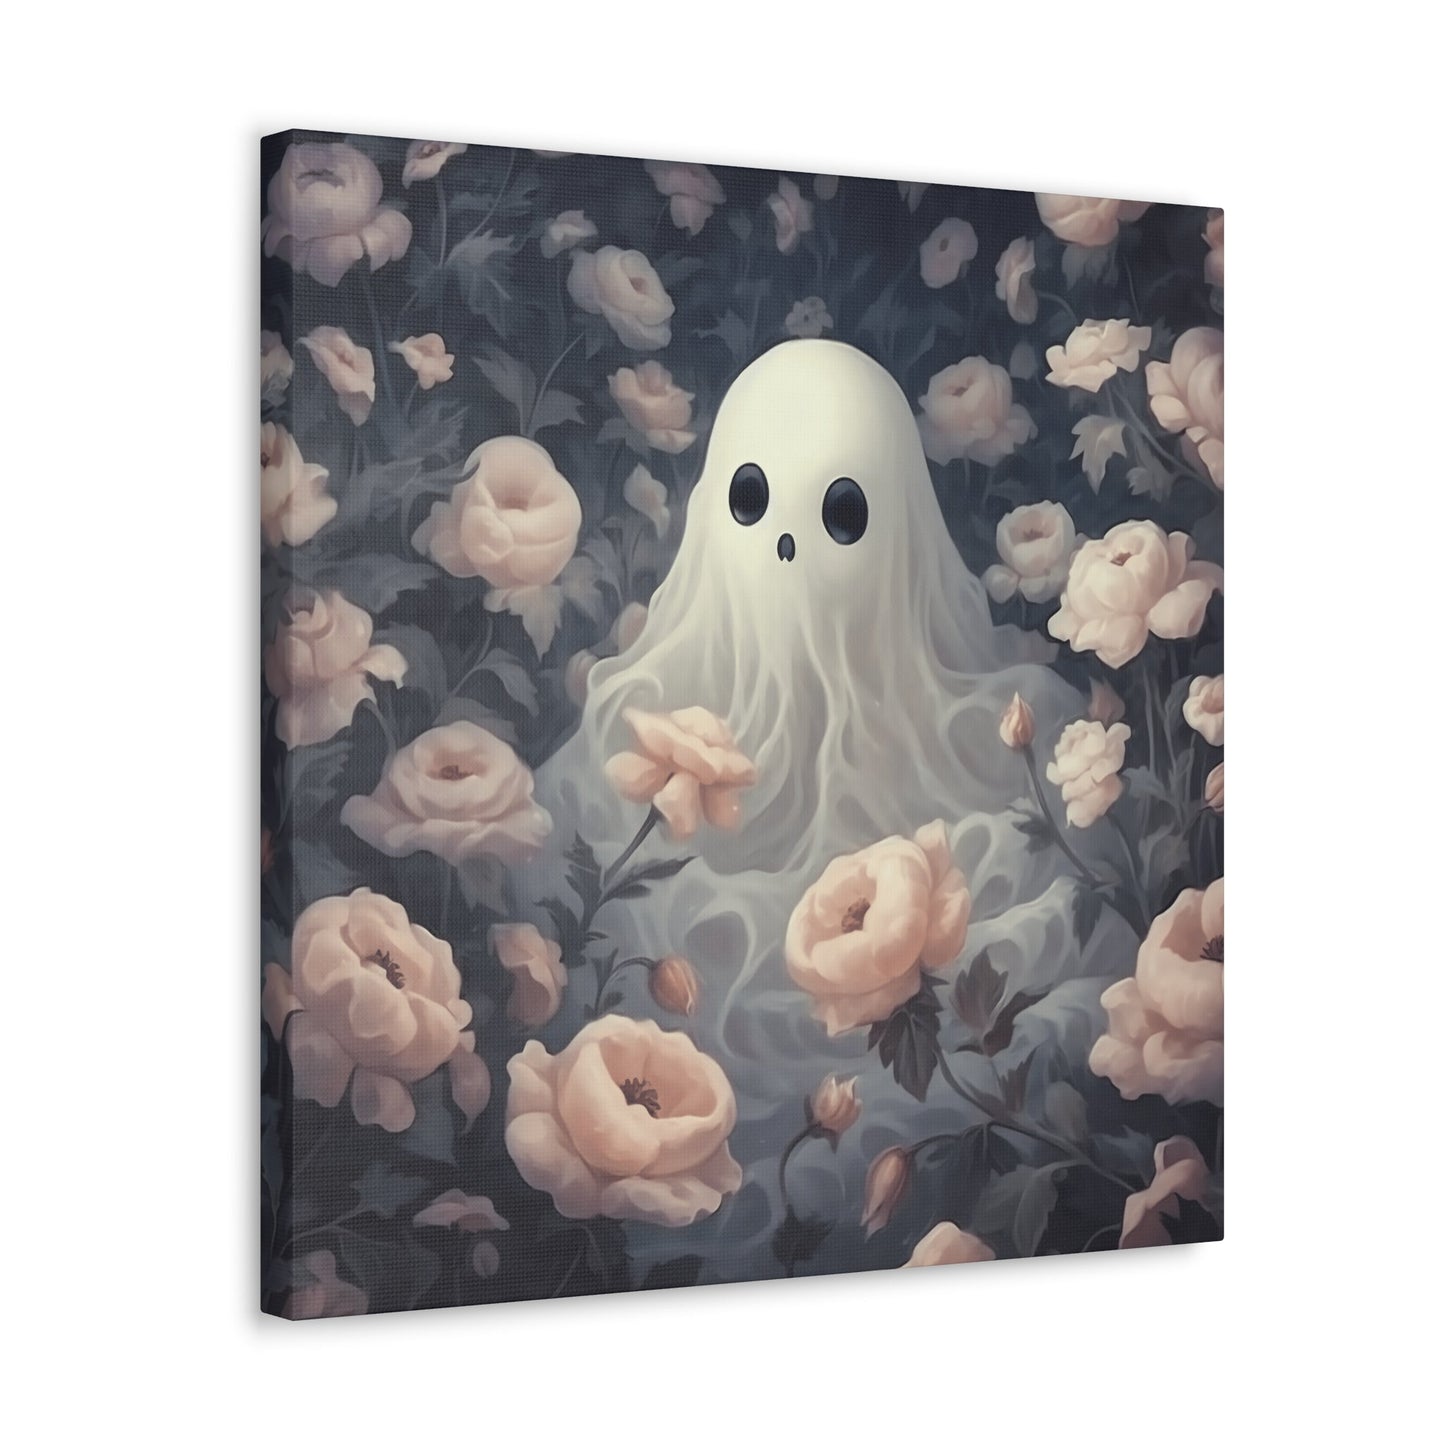 Cute Ghost in Rose Garden Canvas Gallery WrapCanvasVTZdesigns20″ x 20″1.25"Art & Wall DecorCanvasFall Picks